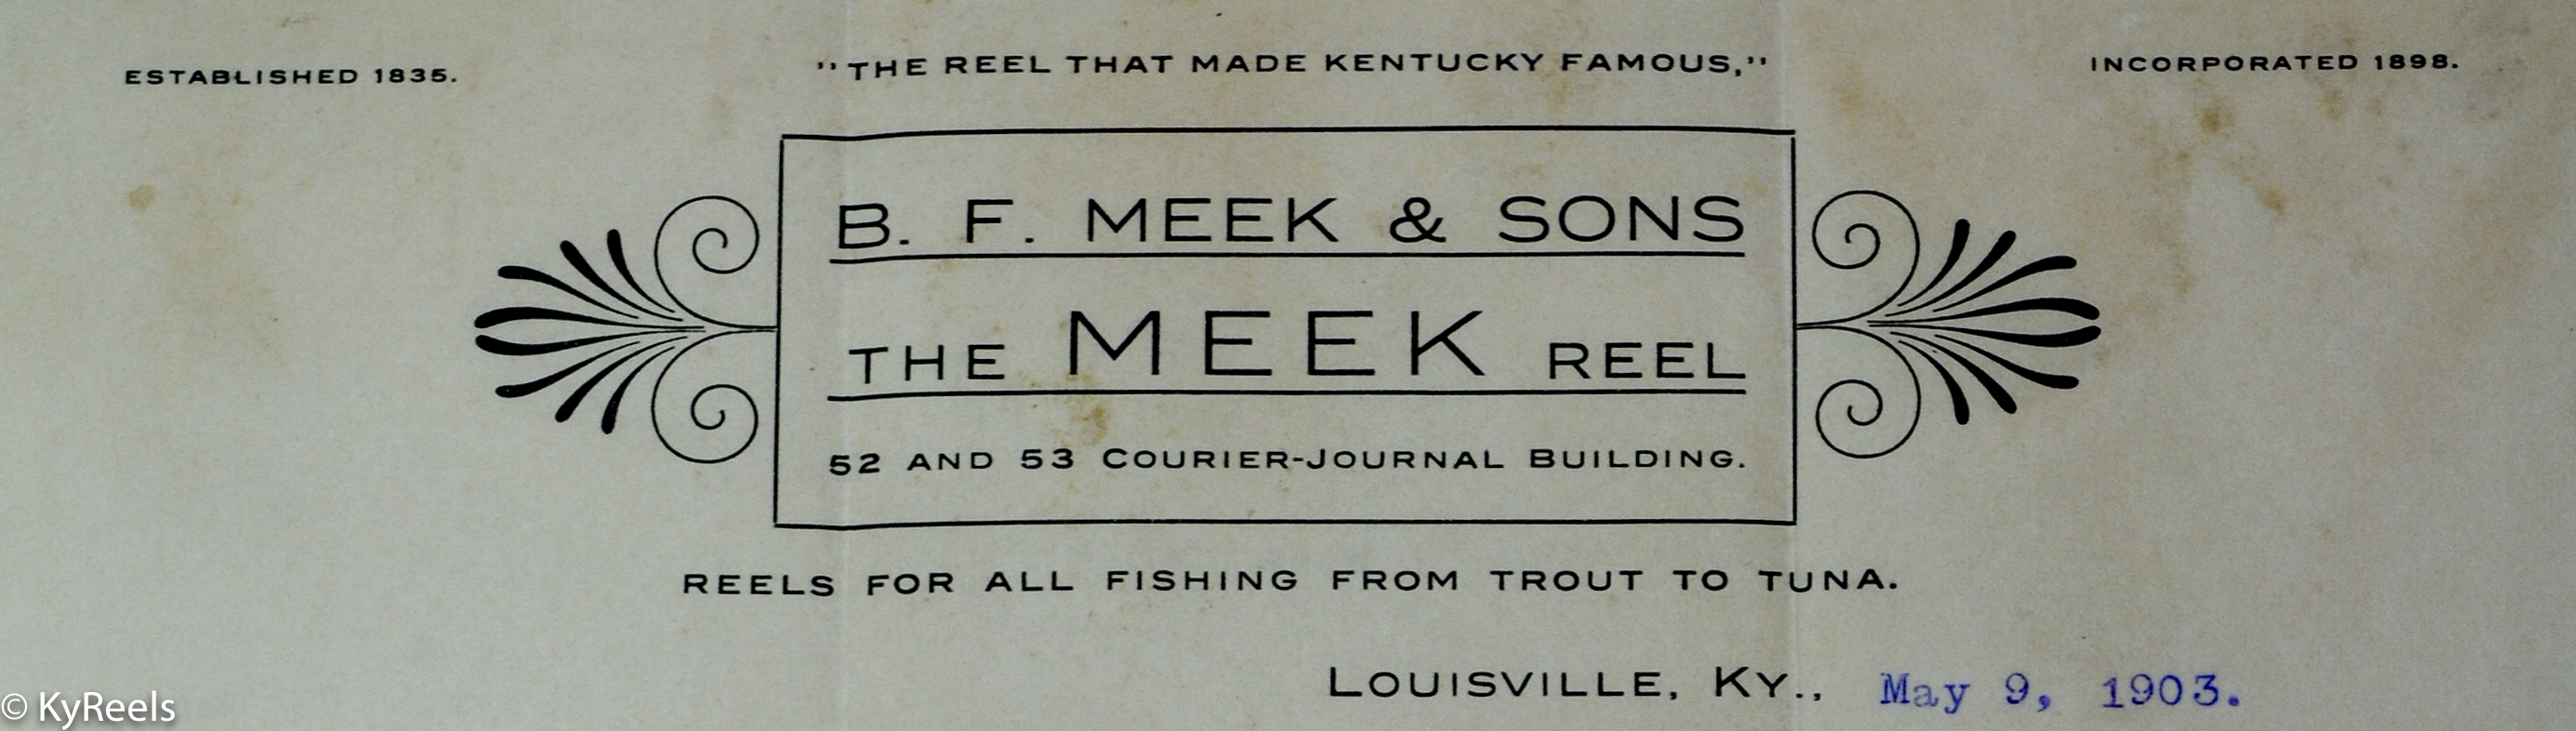 1882-1916 Volumes 1 & 2: A History of B.F Meek in Louisville B.F Meek & Sons 